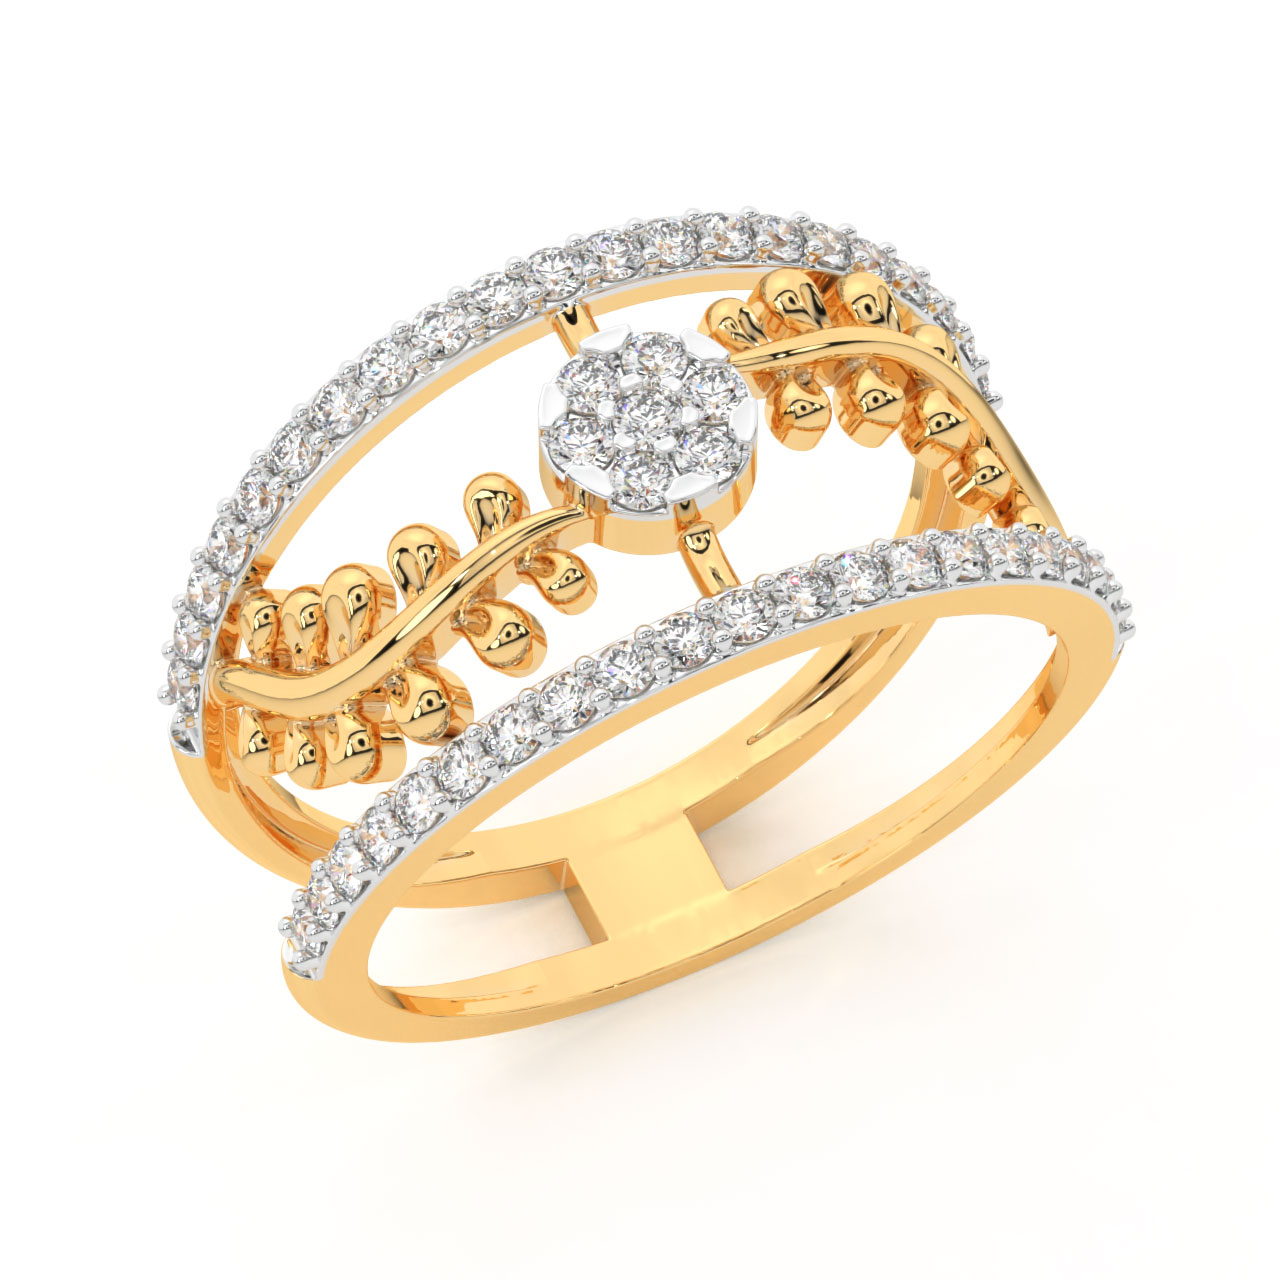 Aaron Diamond Engagement Ring